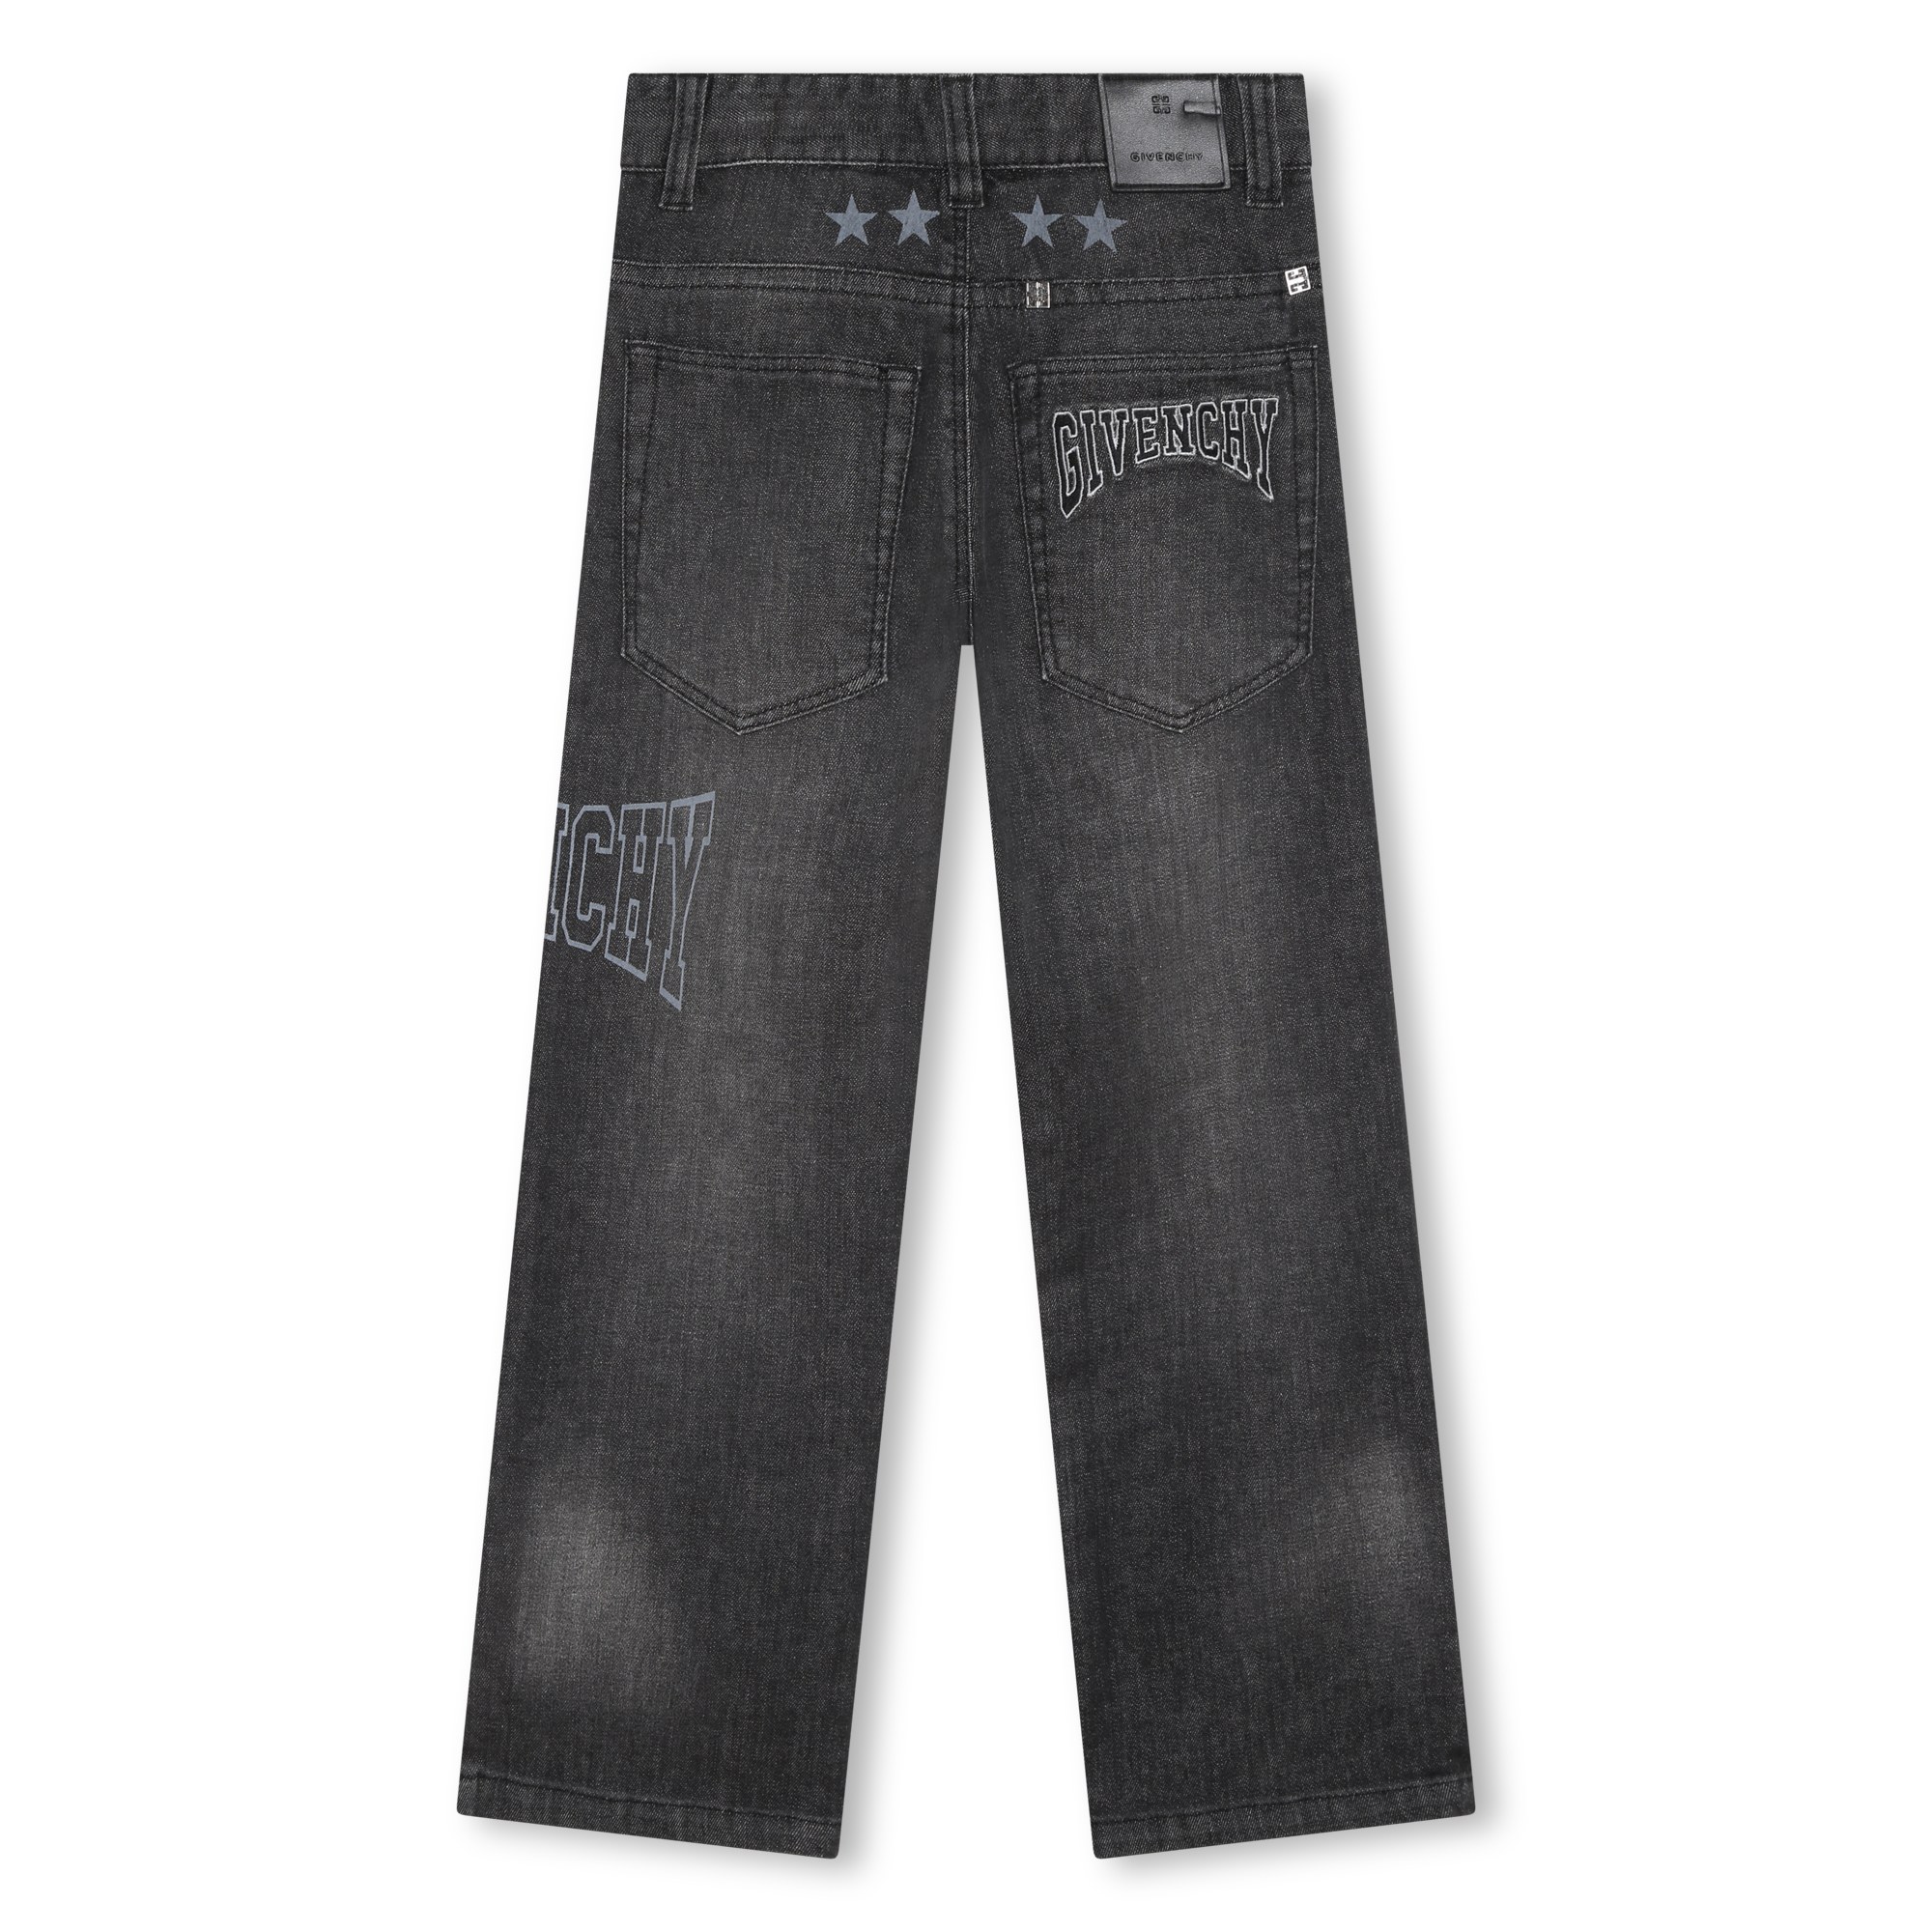 Regulierbare Jeans mit Patches GIVENCHY Für JUNGE